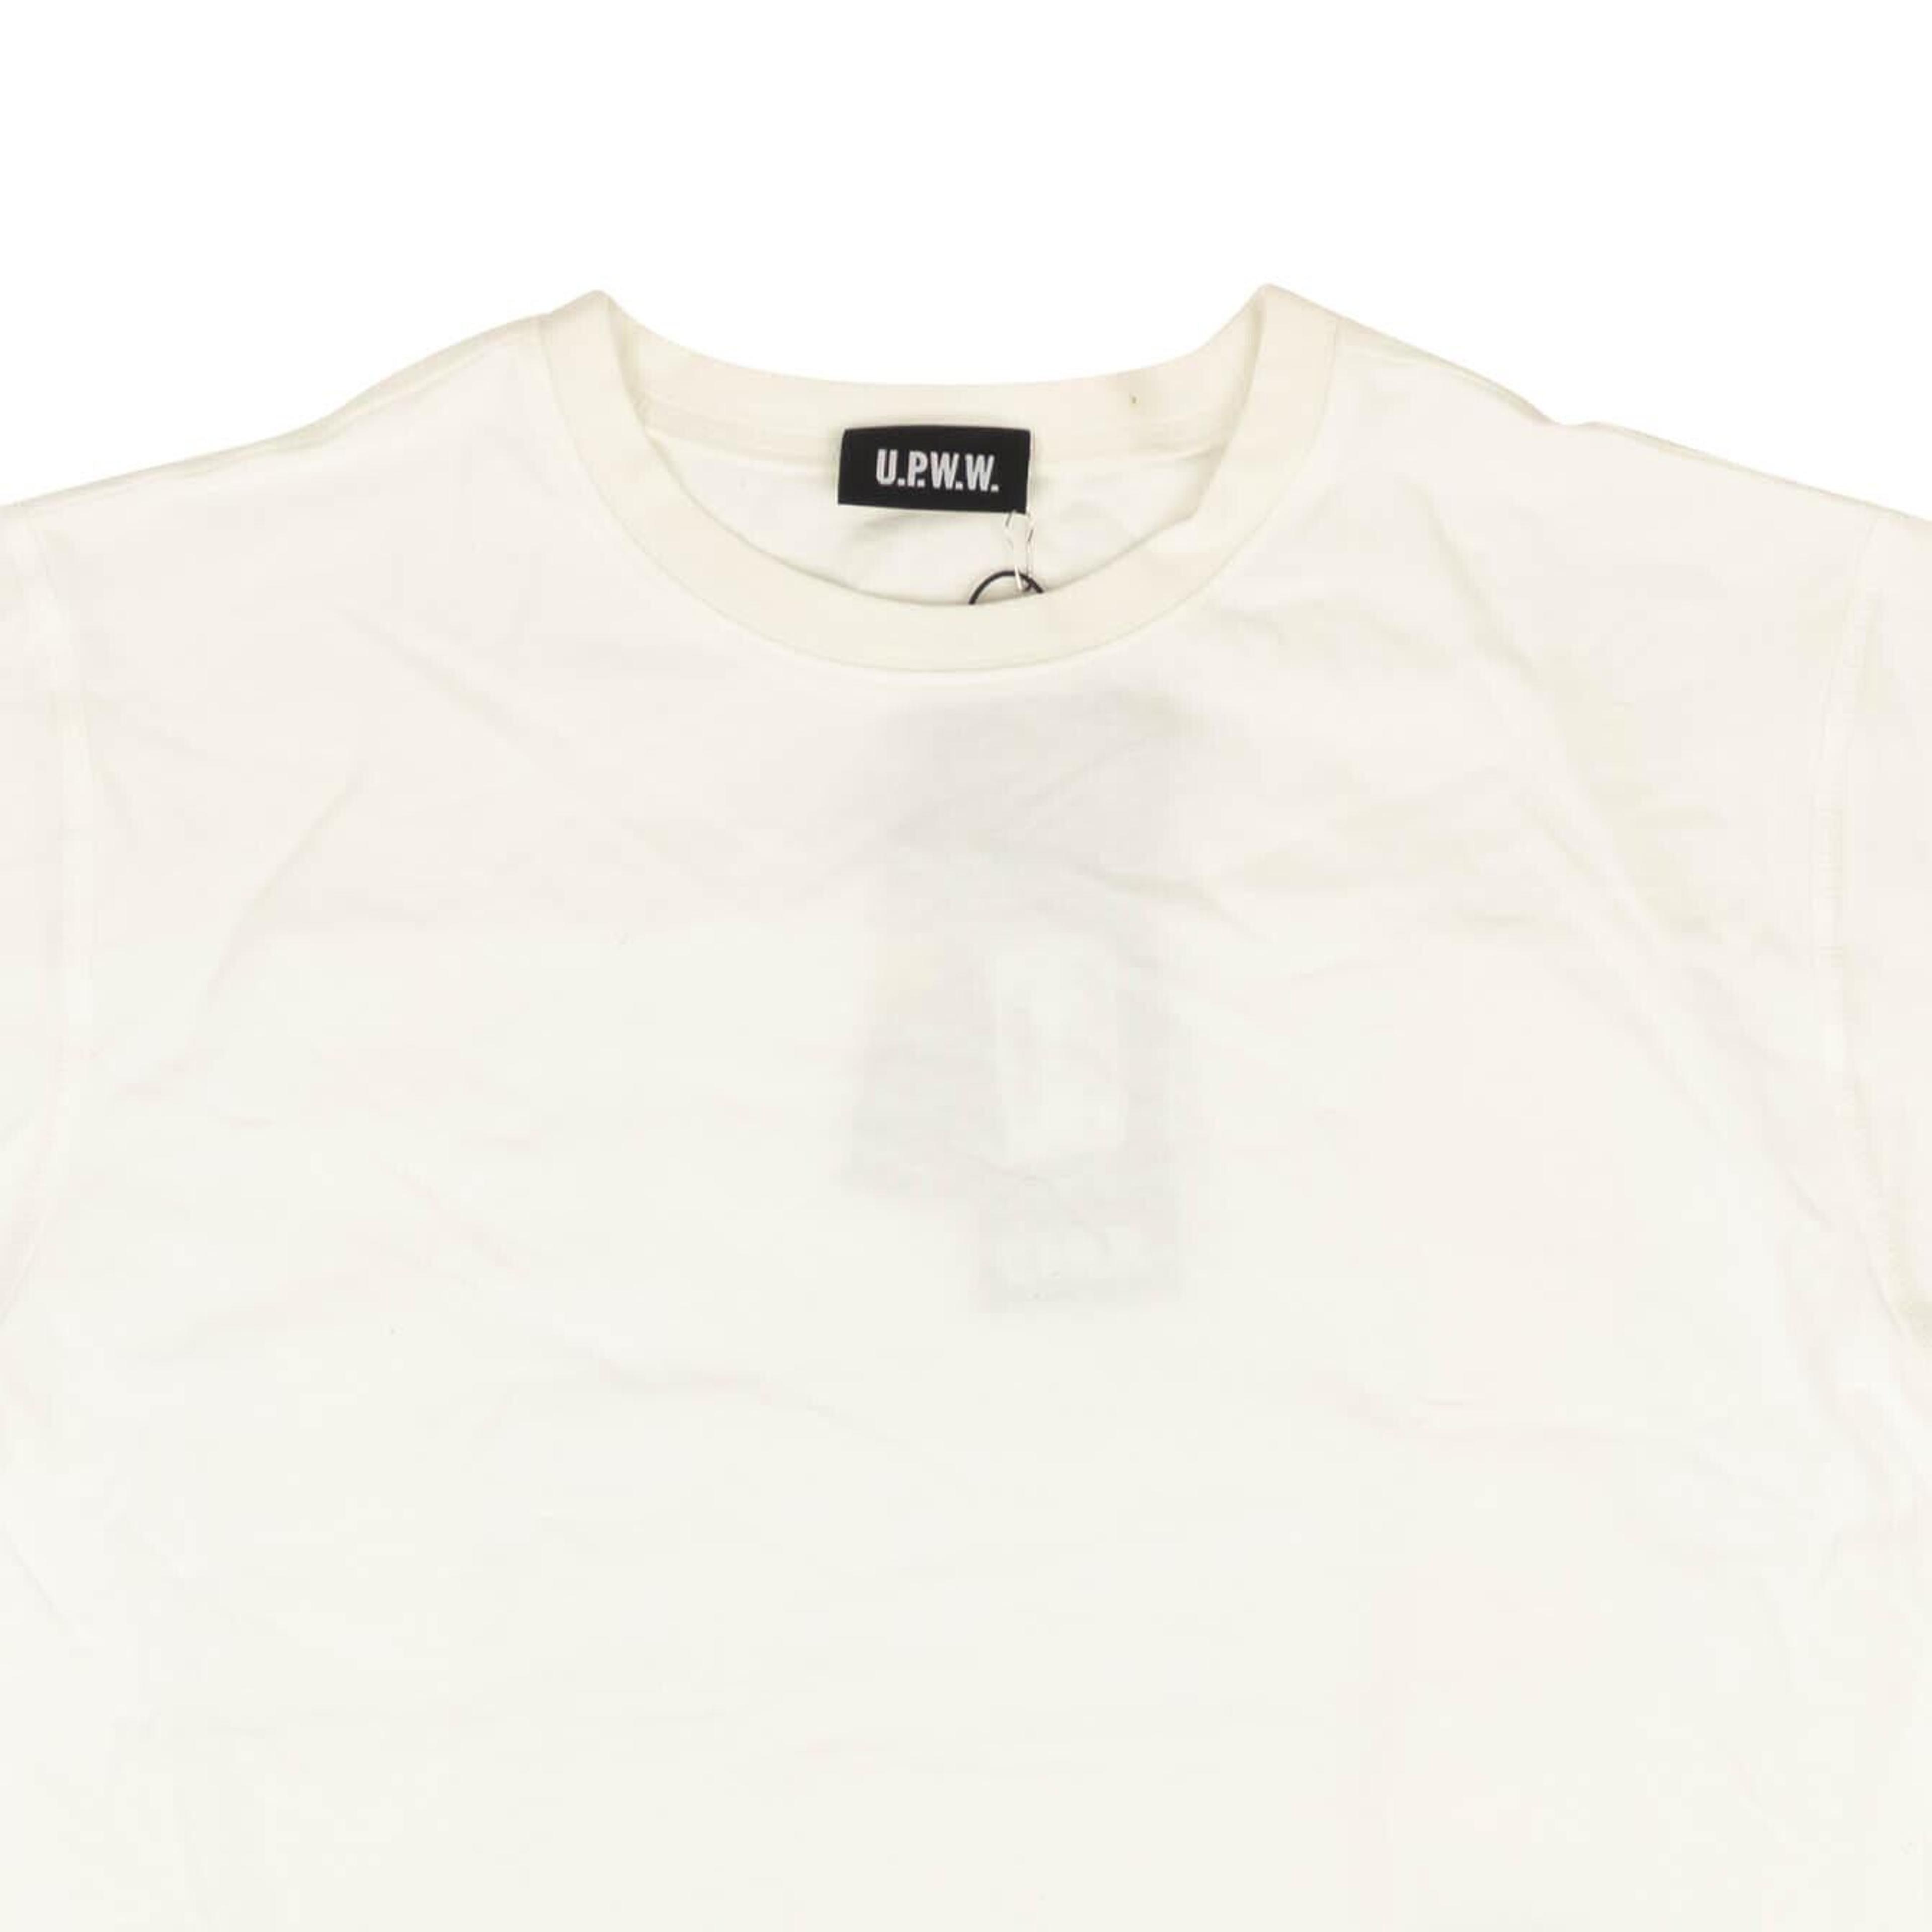 Alternate View 1 of White Short Sleeve With Insert T-Shirt